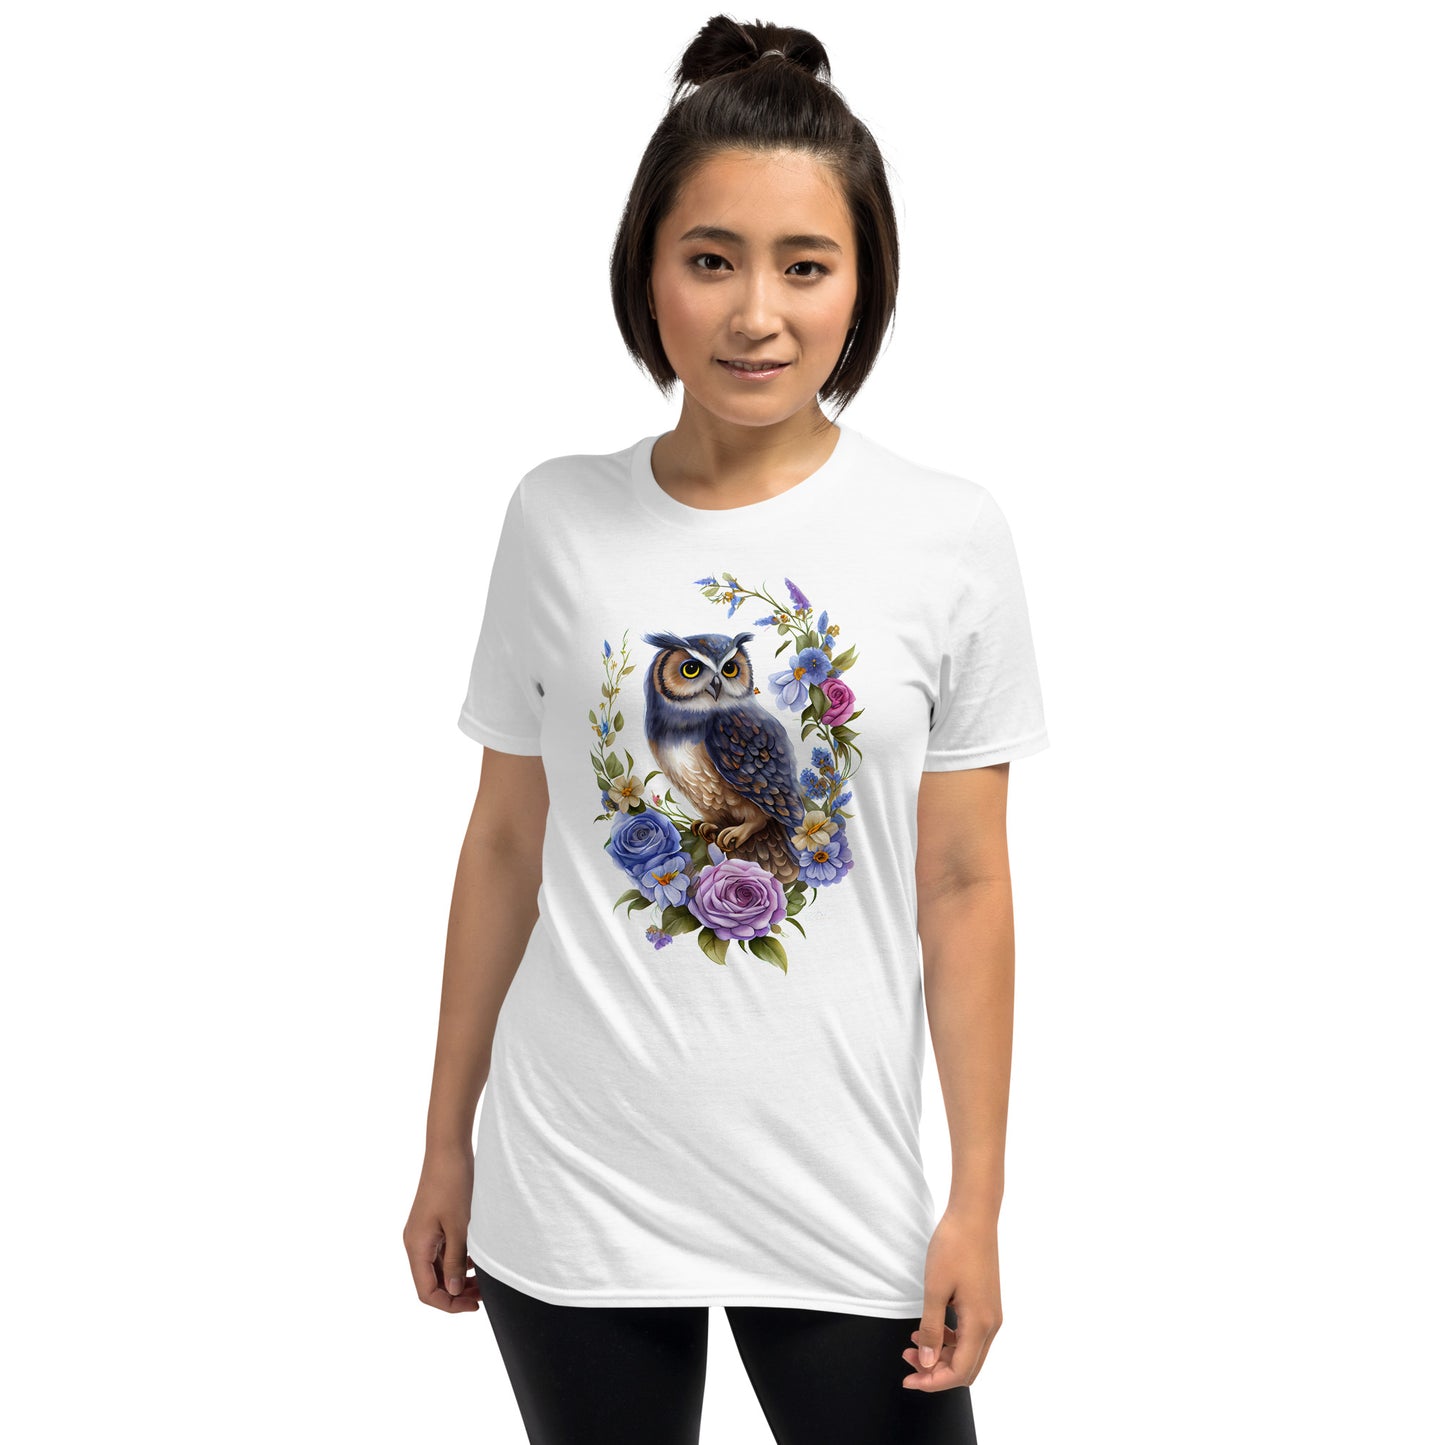 Beautiful Watercolor Floral Owl Art Short-Sleeve Unisex T-Shirt